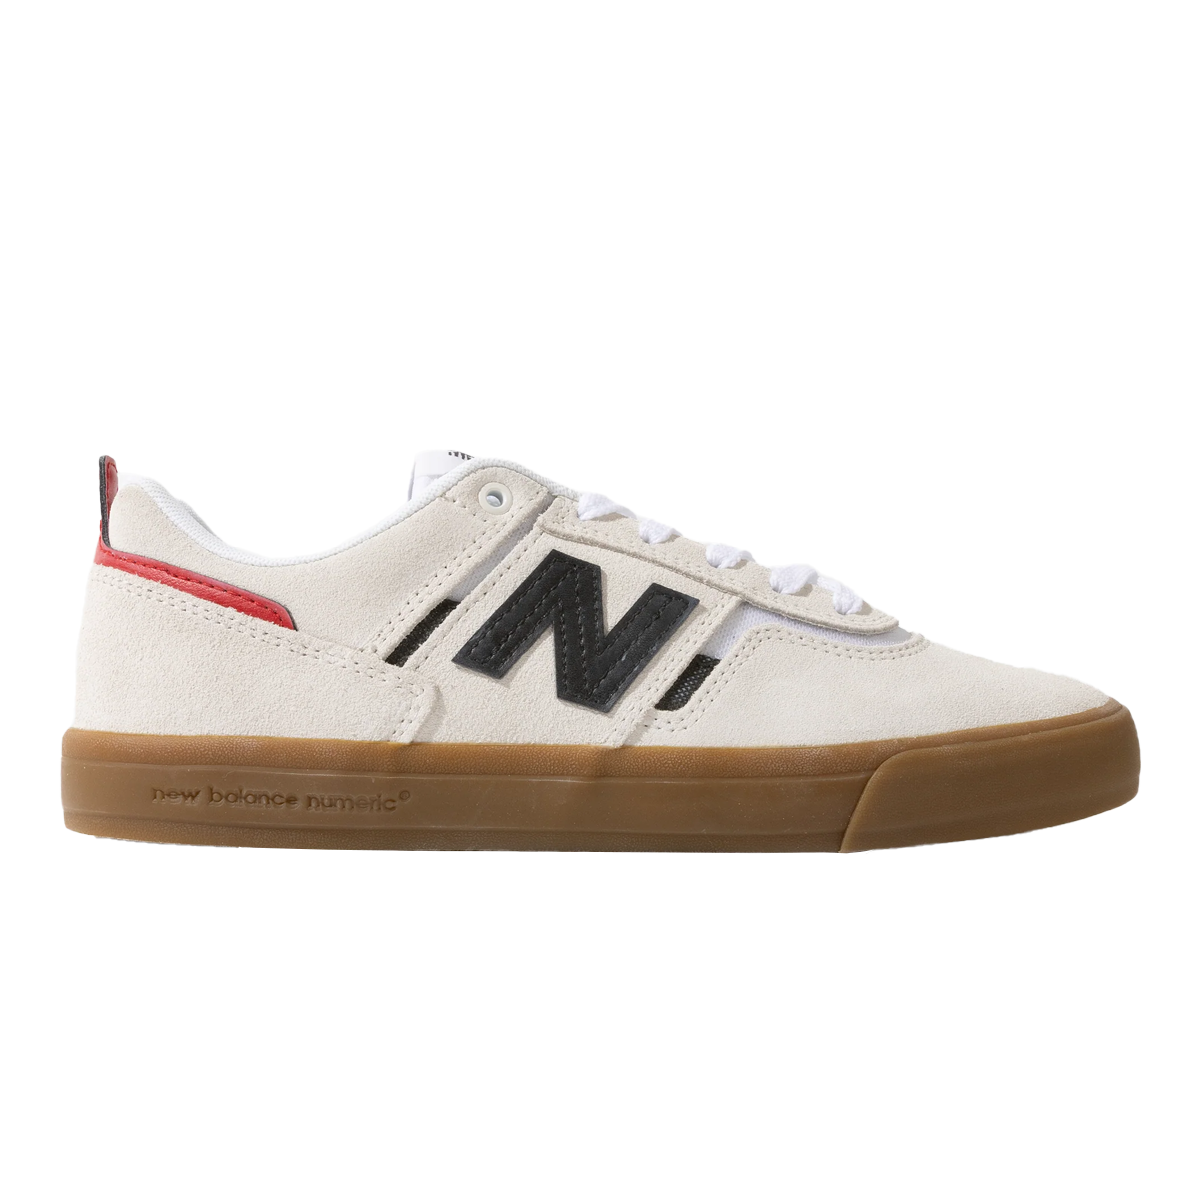 New Balance NM 306 Shoes - White / Black